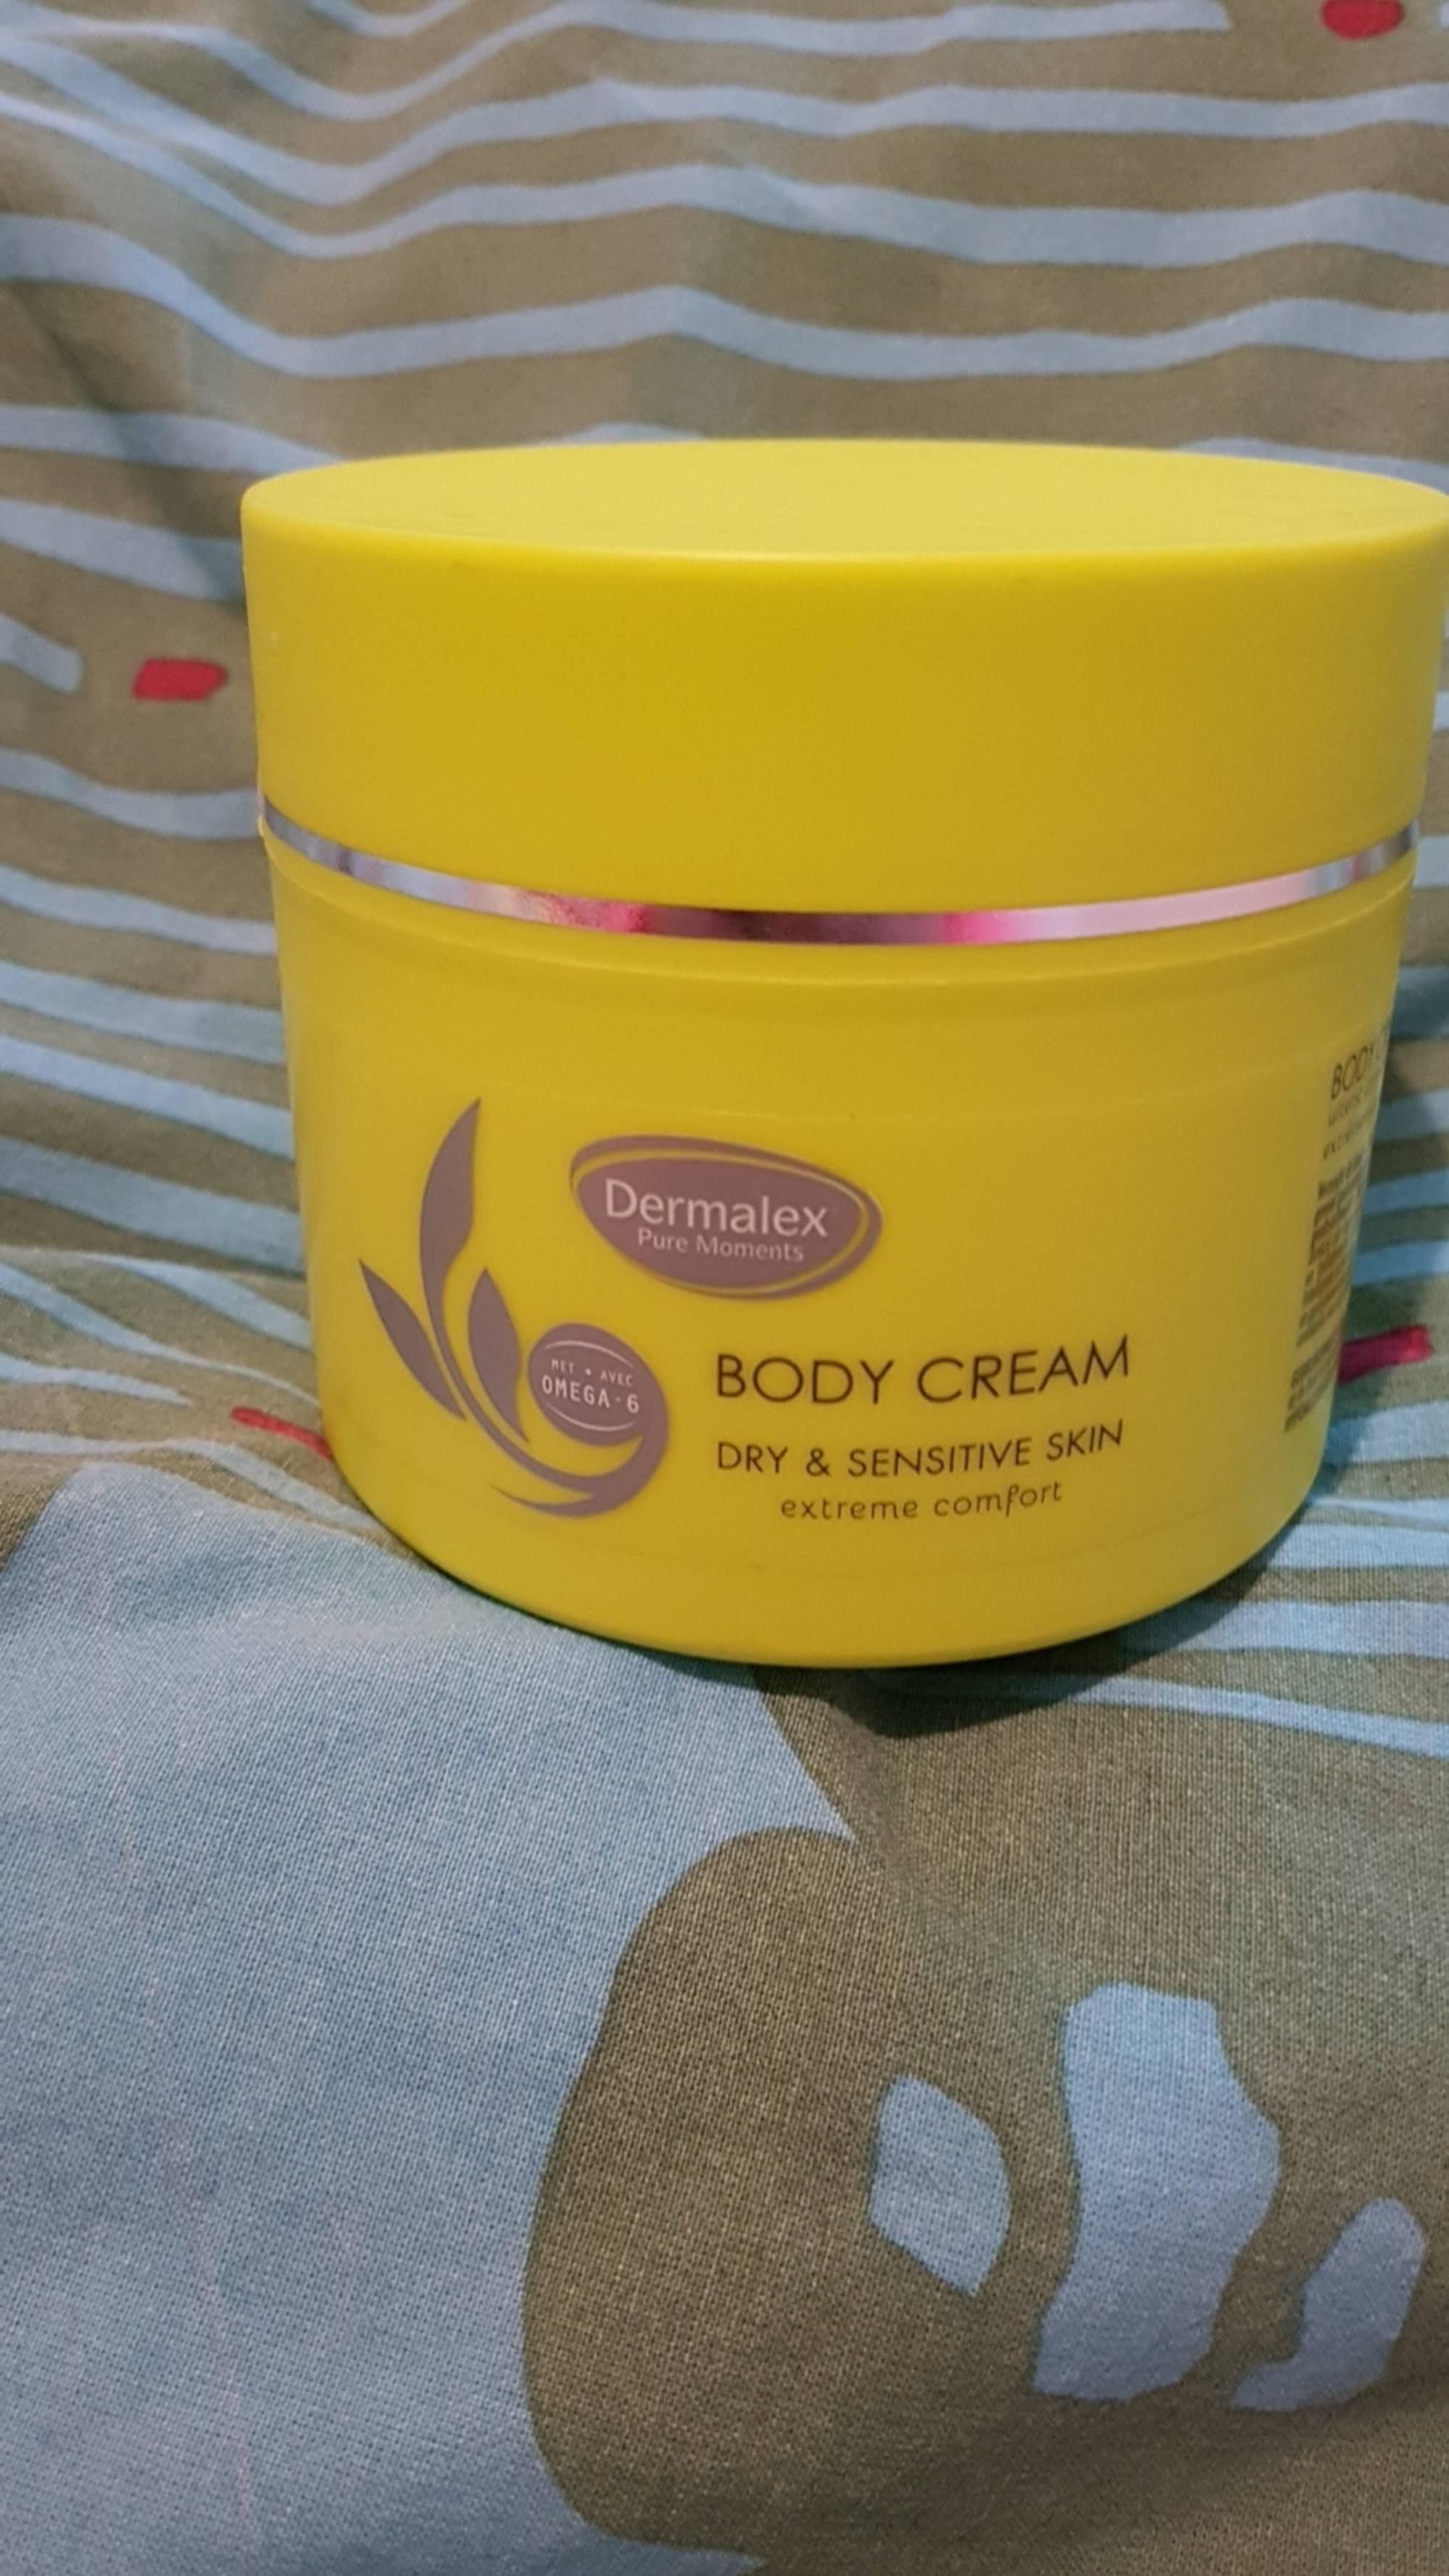 DERMALEX - Body cream for dry & sensitive skin extreme comfort